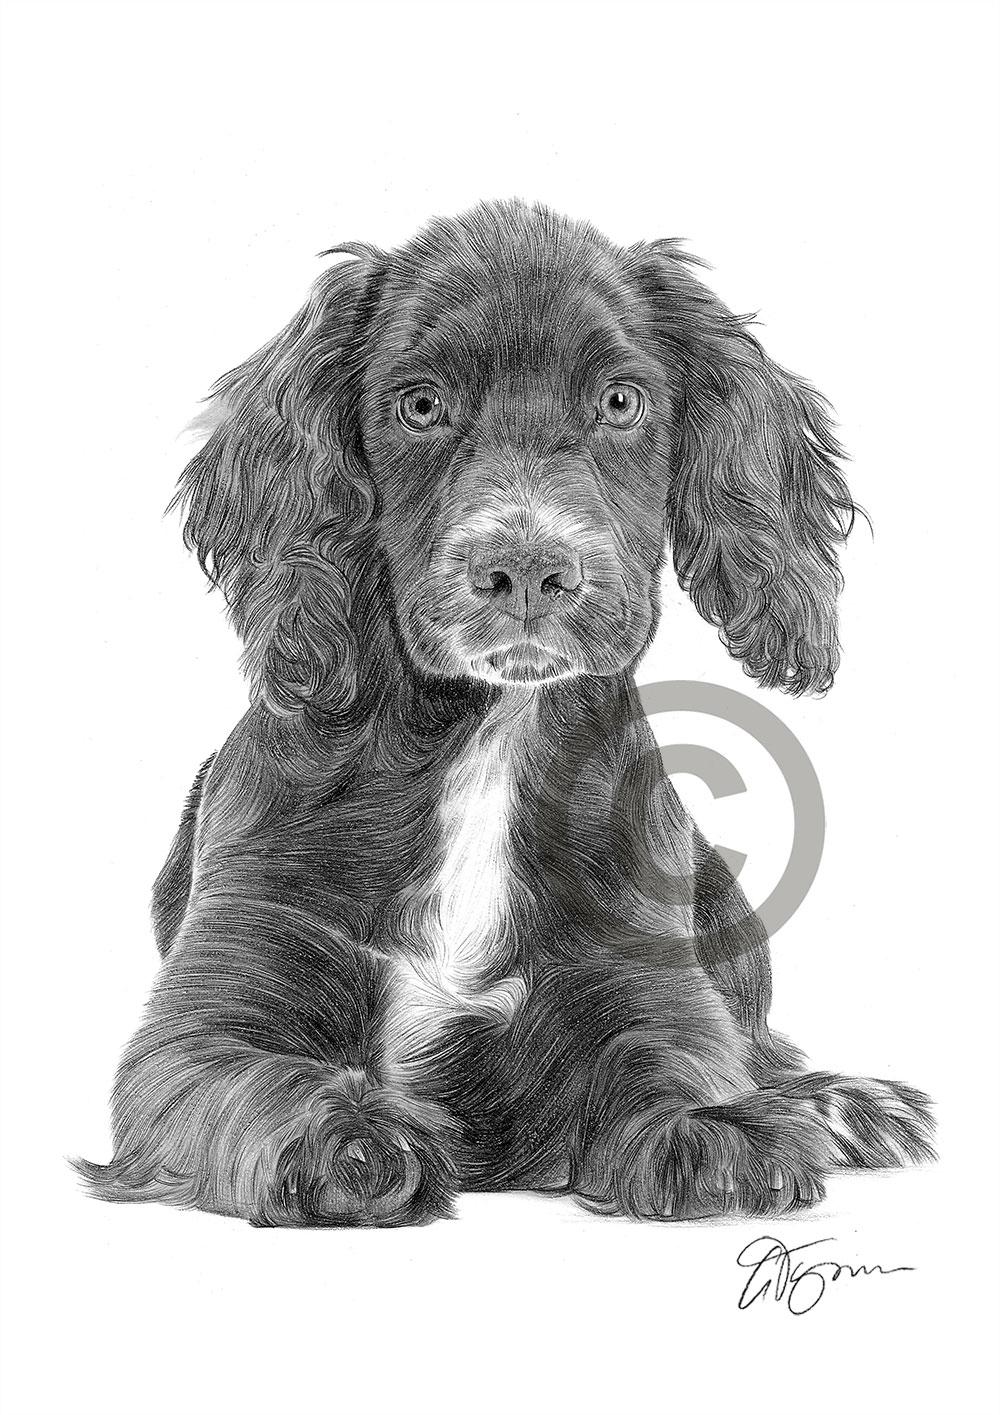 Pencil drawing of a Cocker Spaniel puppy by artist Gary Tymon